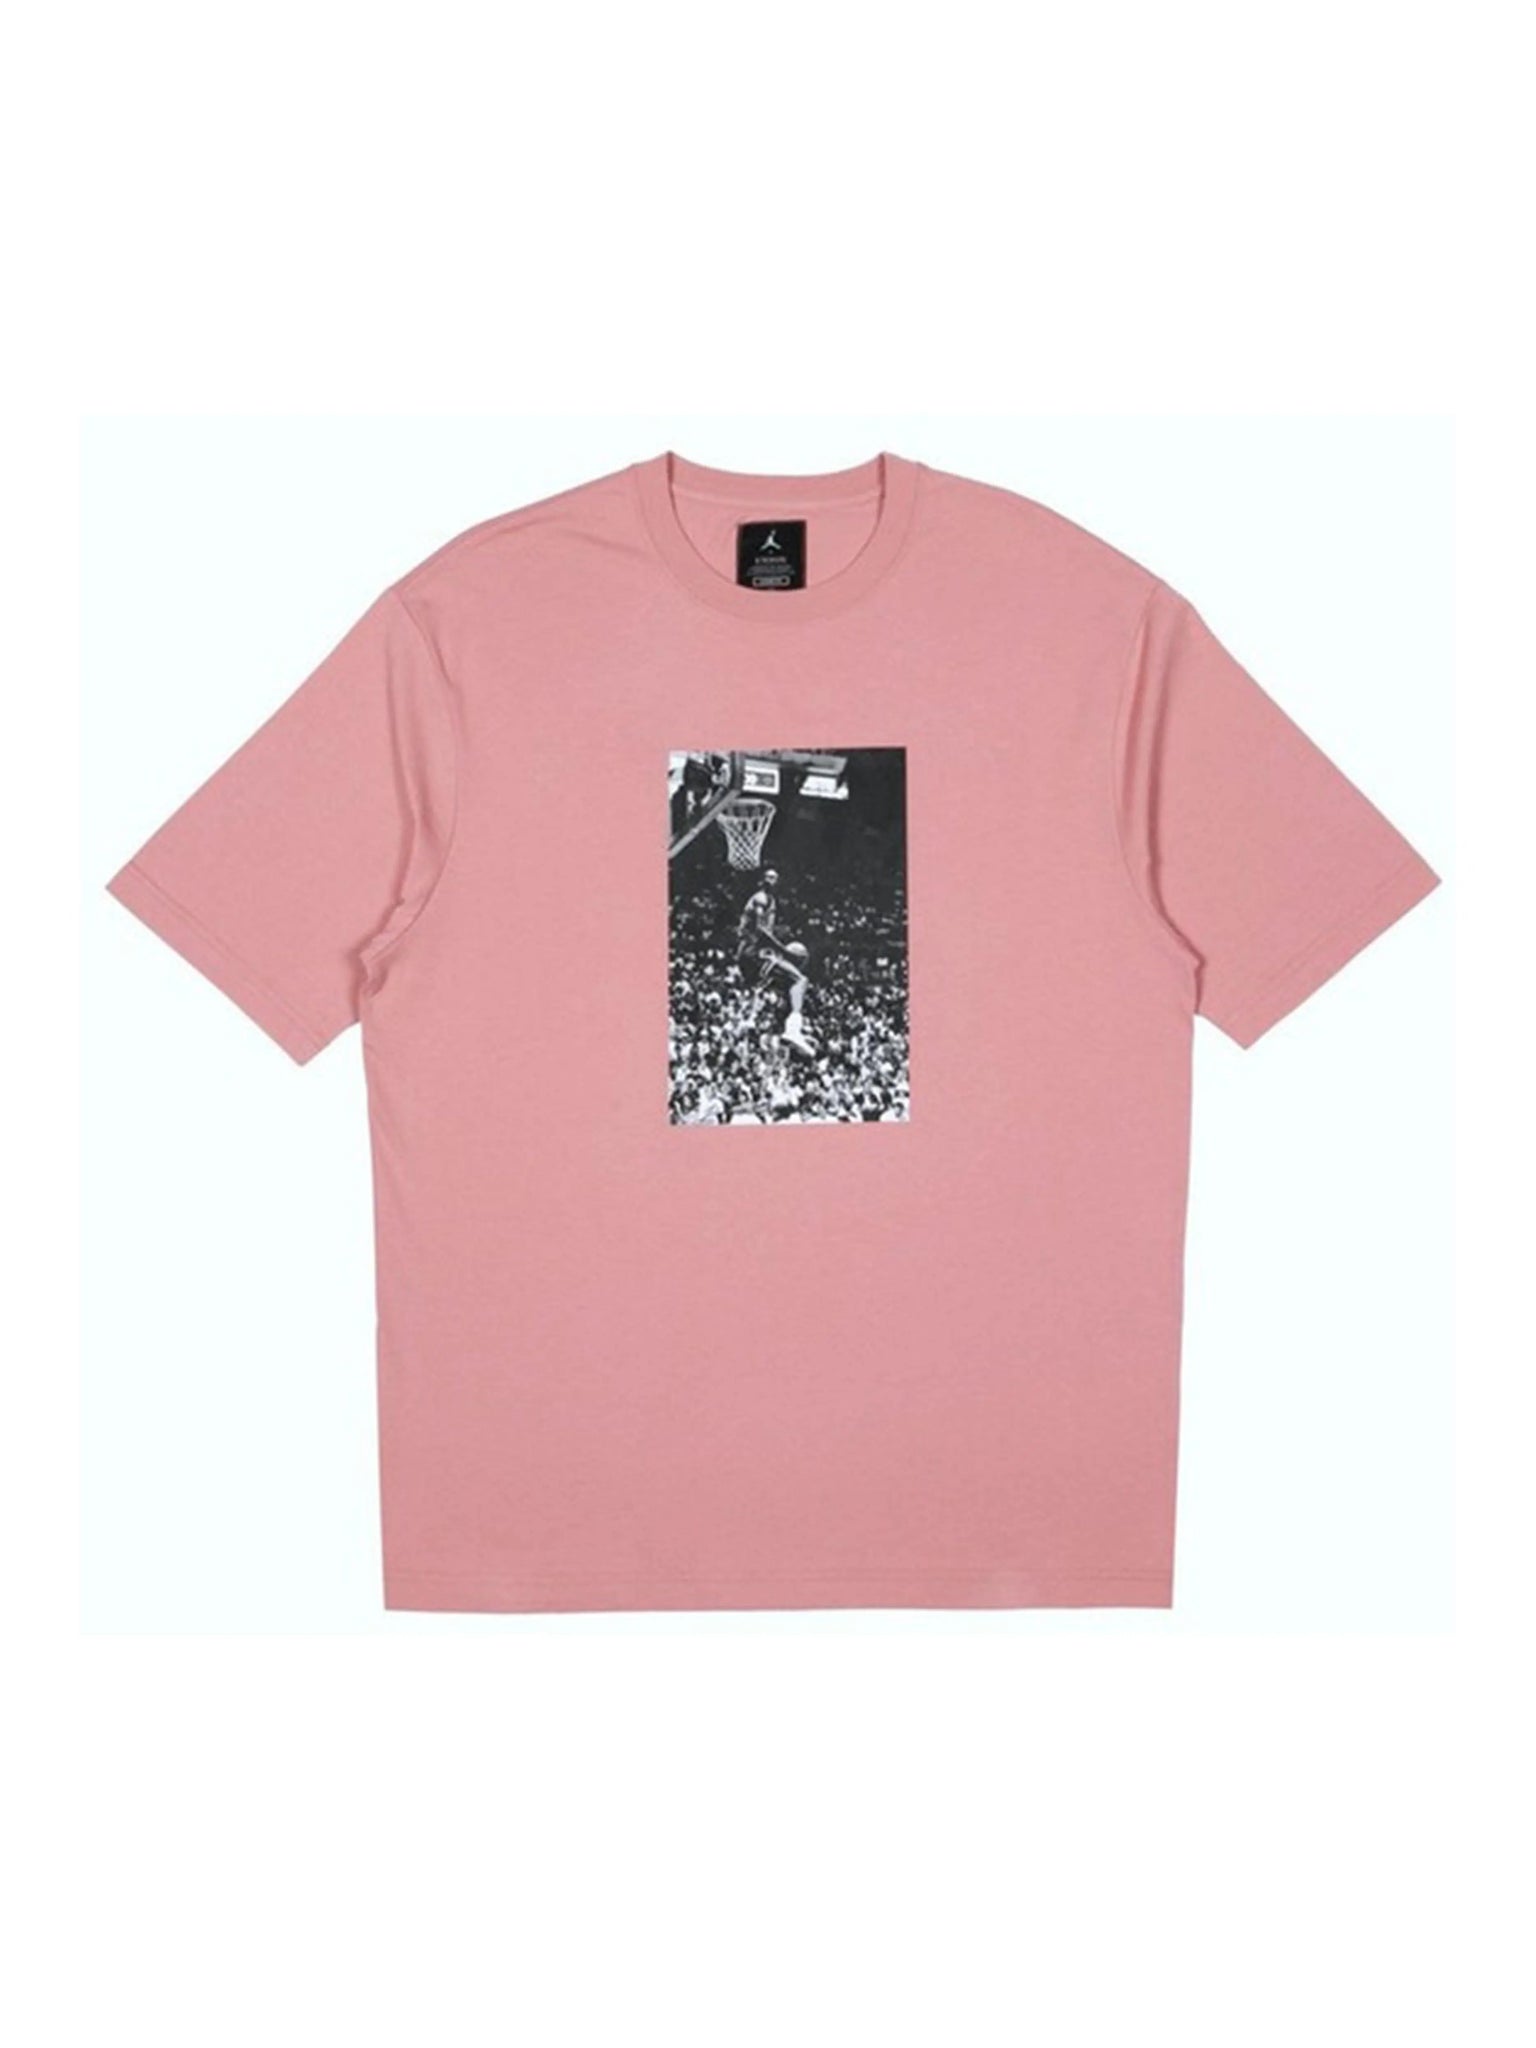 Nike Air Jordan X Union Reverse Dunk T-shirt Rust Pink Prior